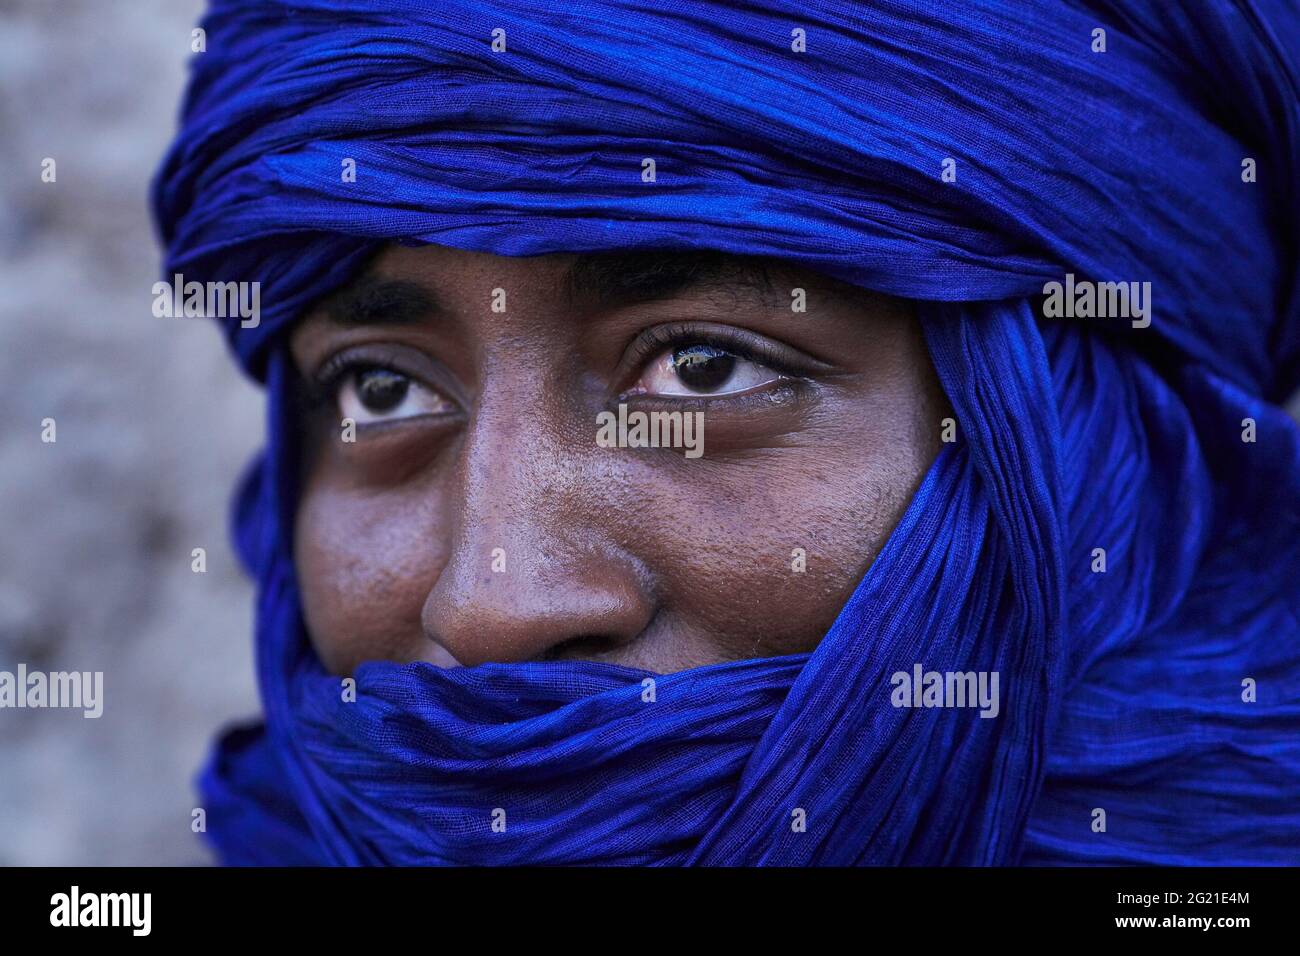 Mali, Timbuktu , Nahaufnahme eines tuareg-Mannes mit blauem Turban, Porträt eines Tuareg-Mannes mit Indigo-Turban Stockfoto